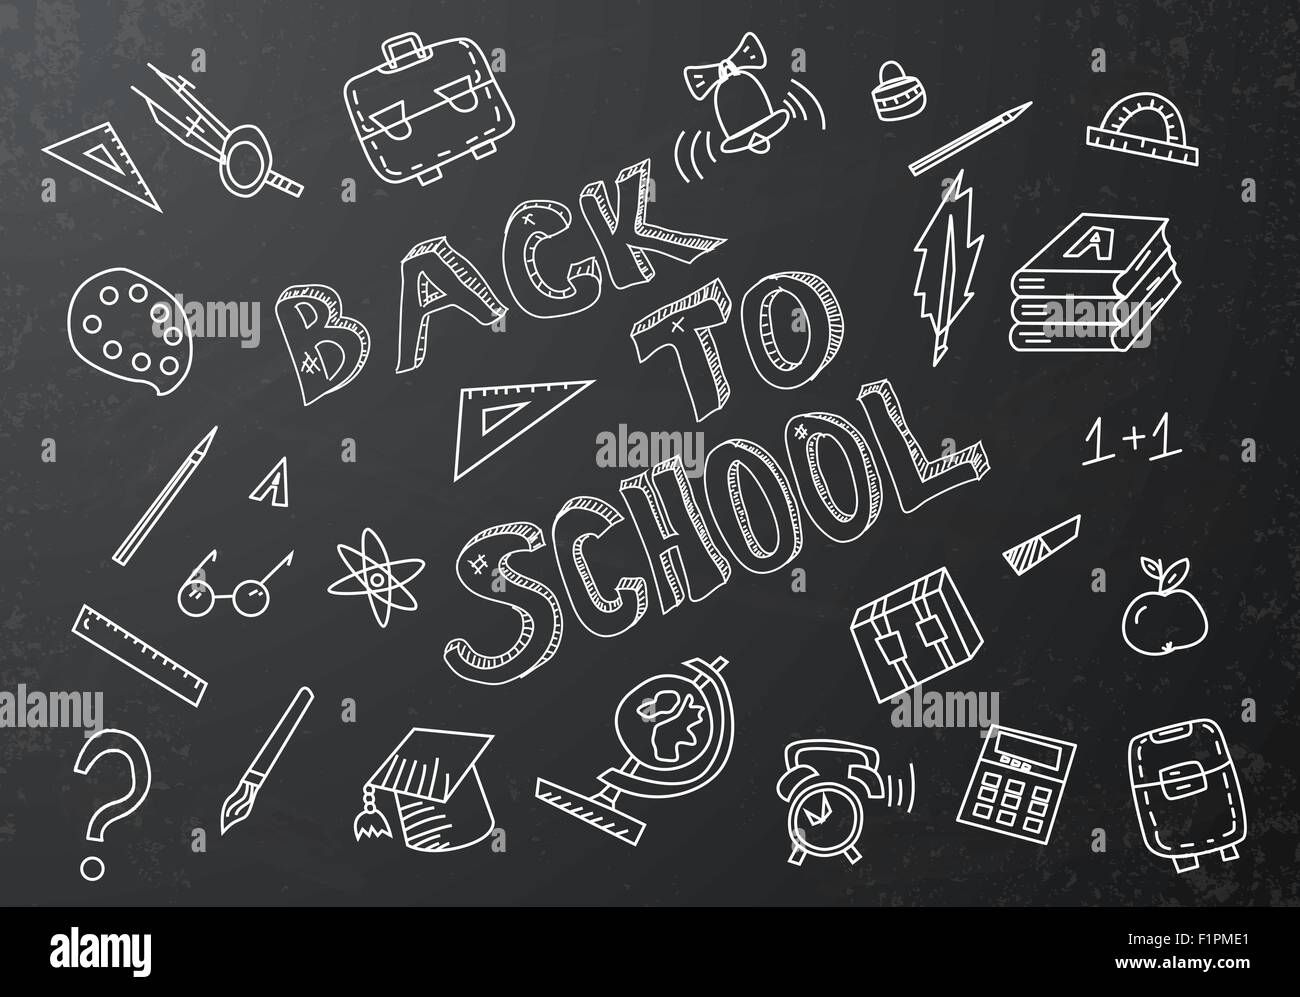 Back to school chalkboard sketch Vector illustration Stock Vector